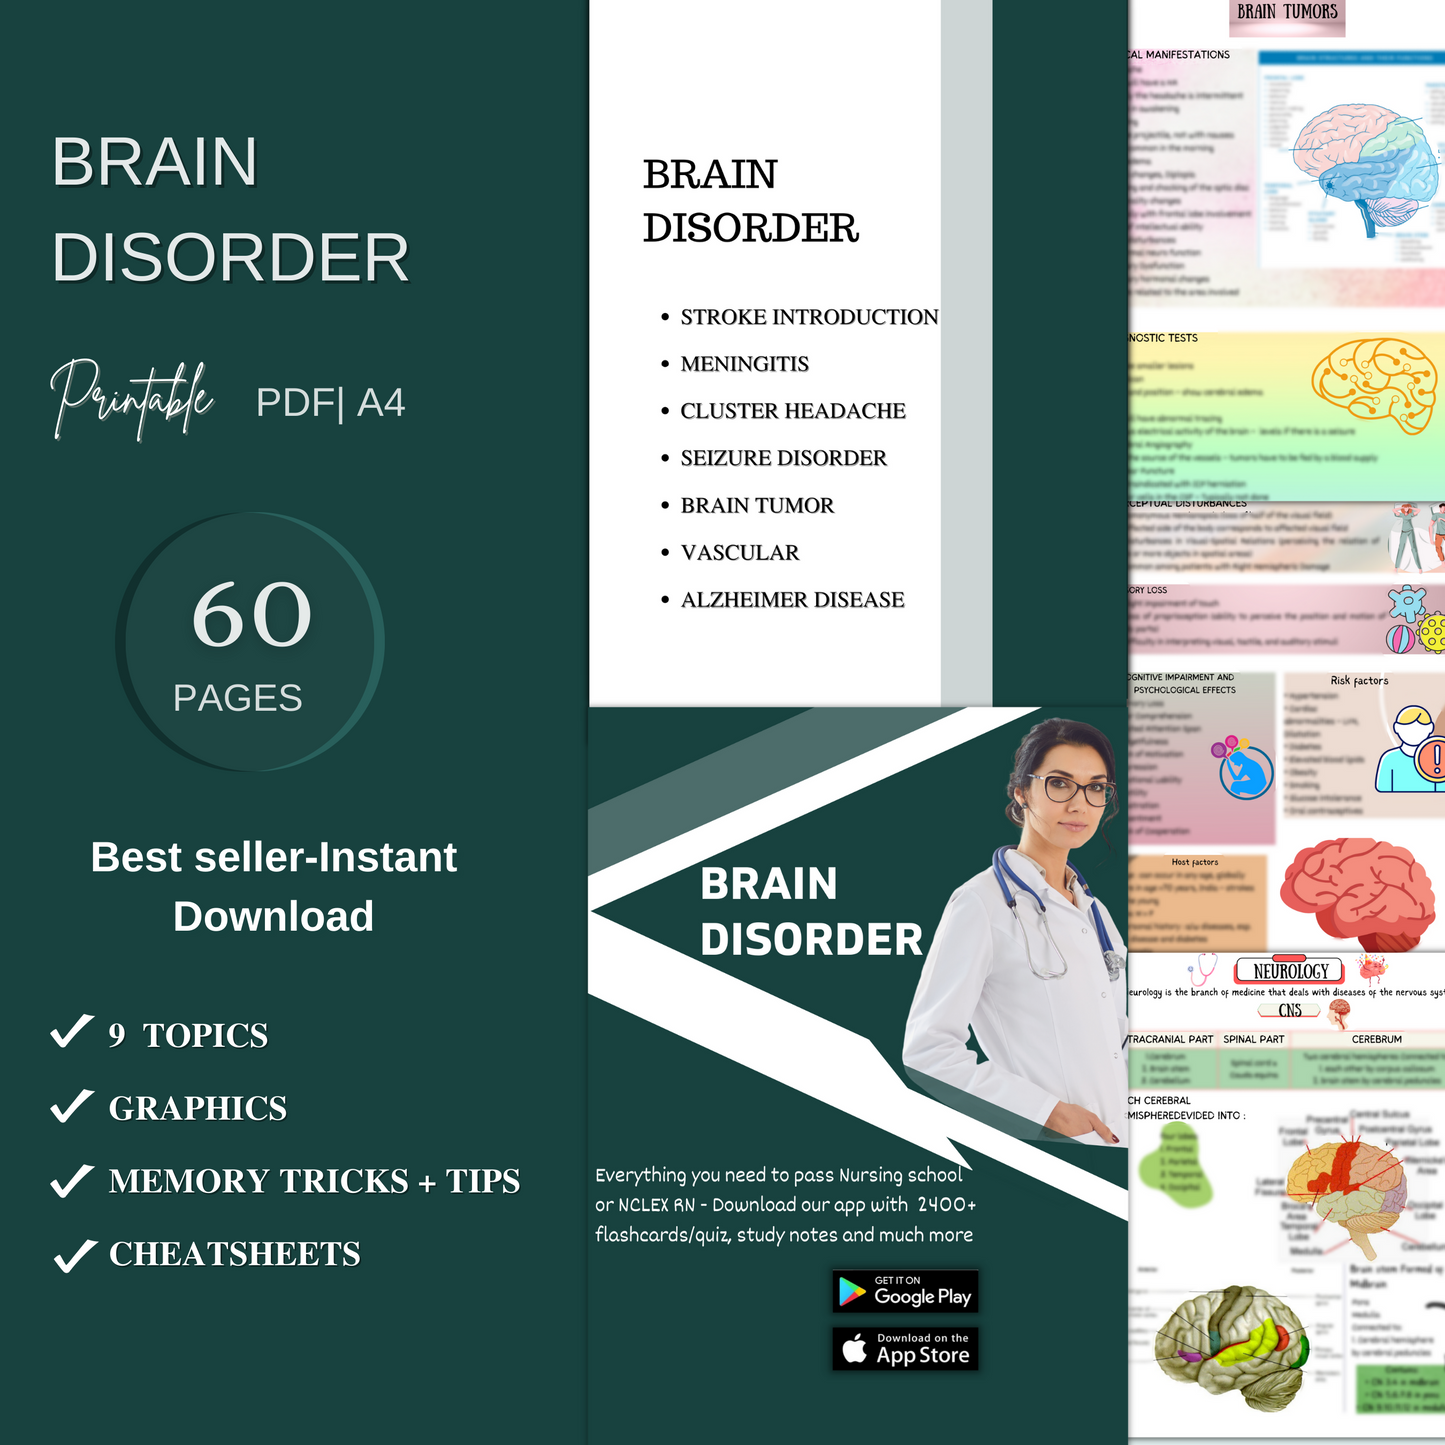 Brain Disorder Study Guide